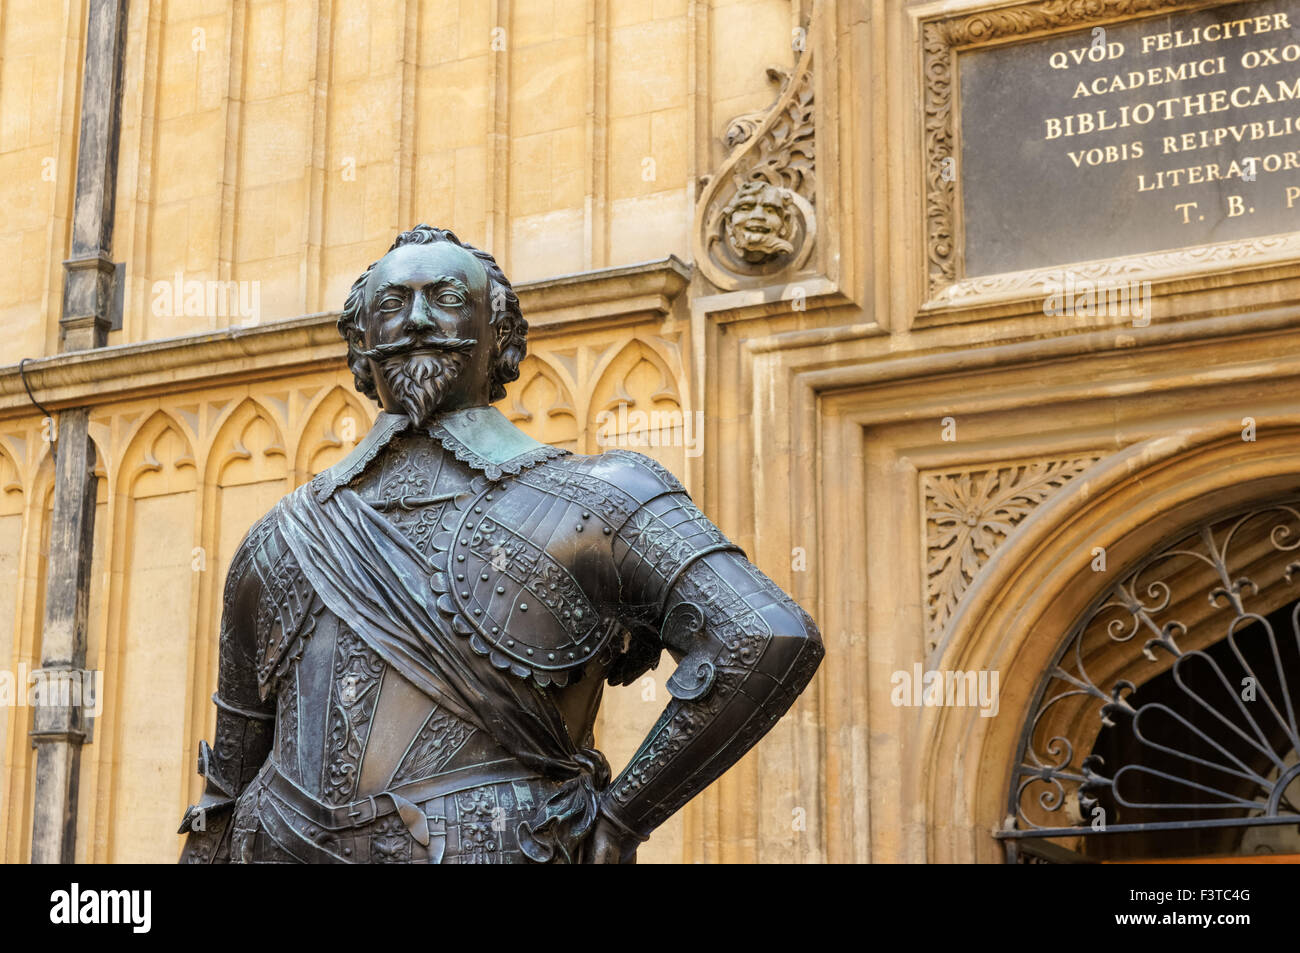 Earl of Pembroke Statue im Hof des The Bodleian Library in Oxford Oxfordshire England Vereinigtes Königreich Großbritannien Stockfoto